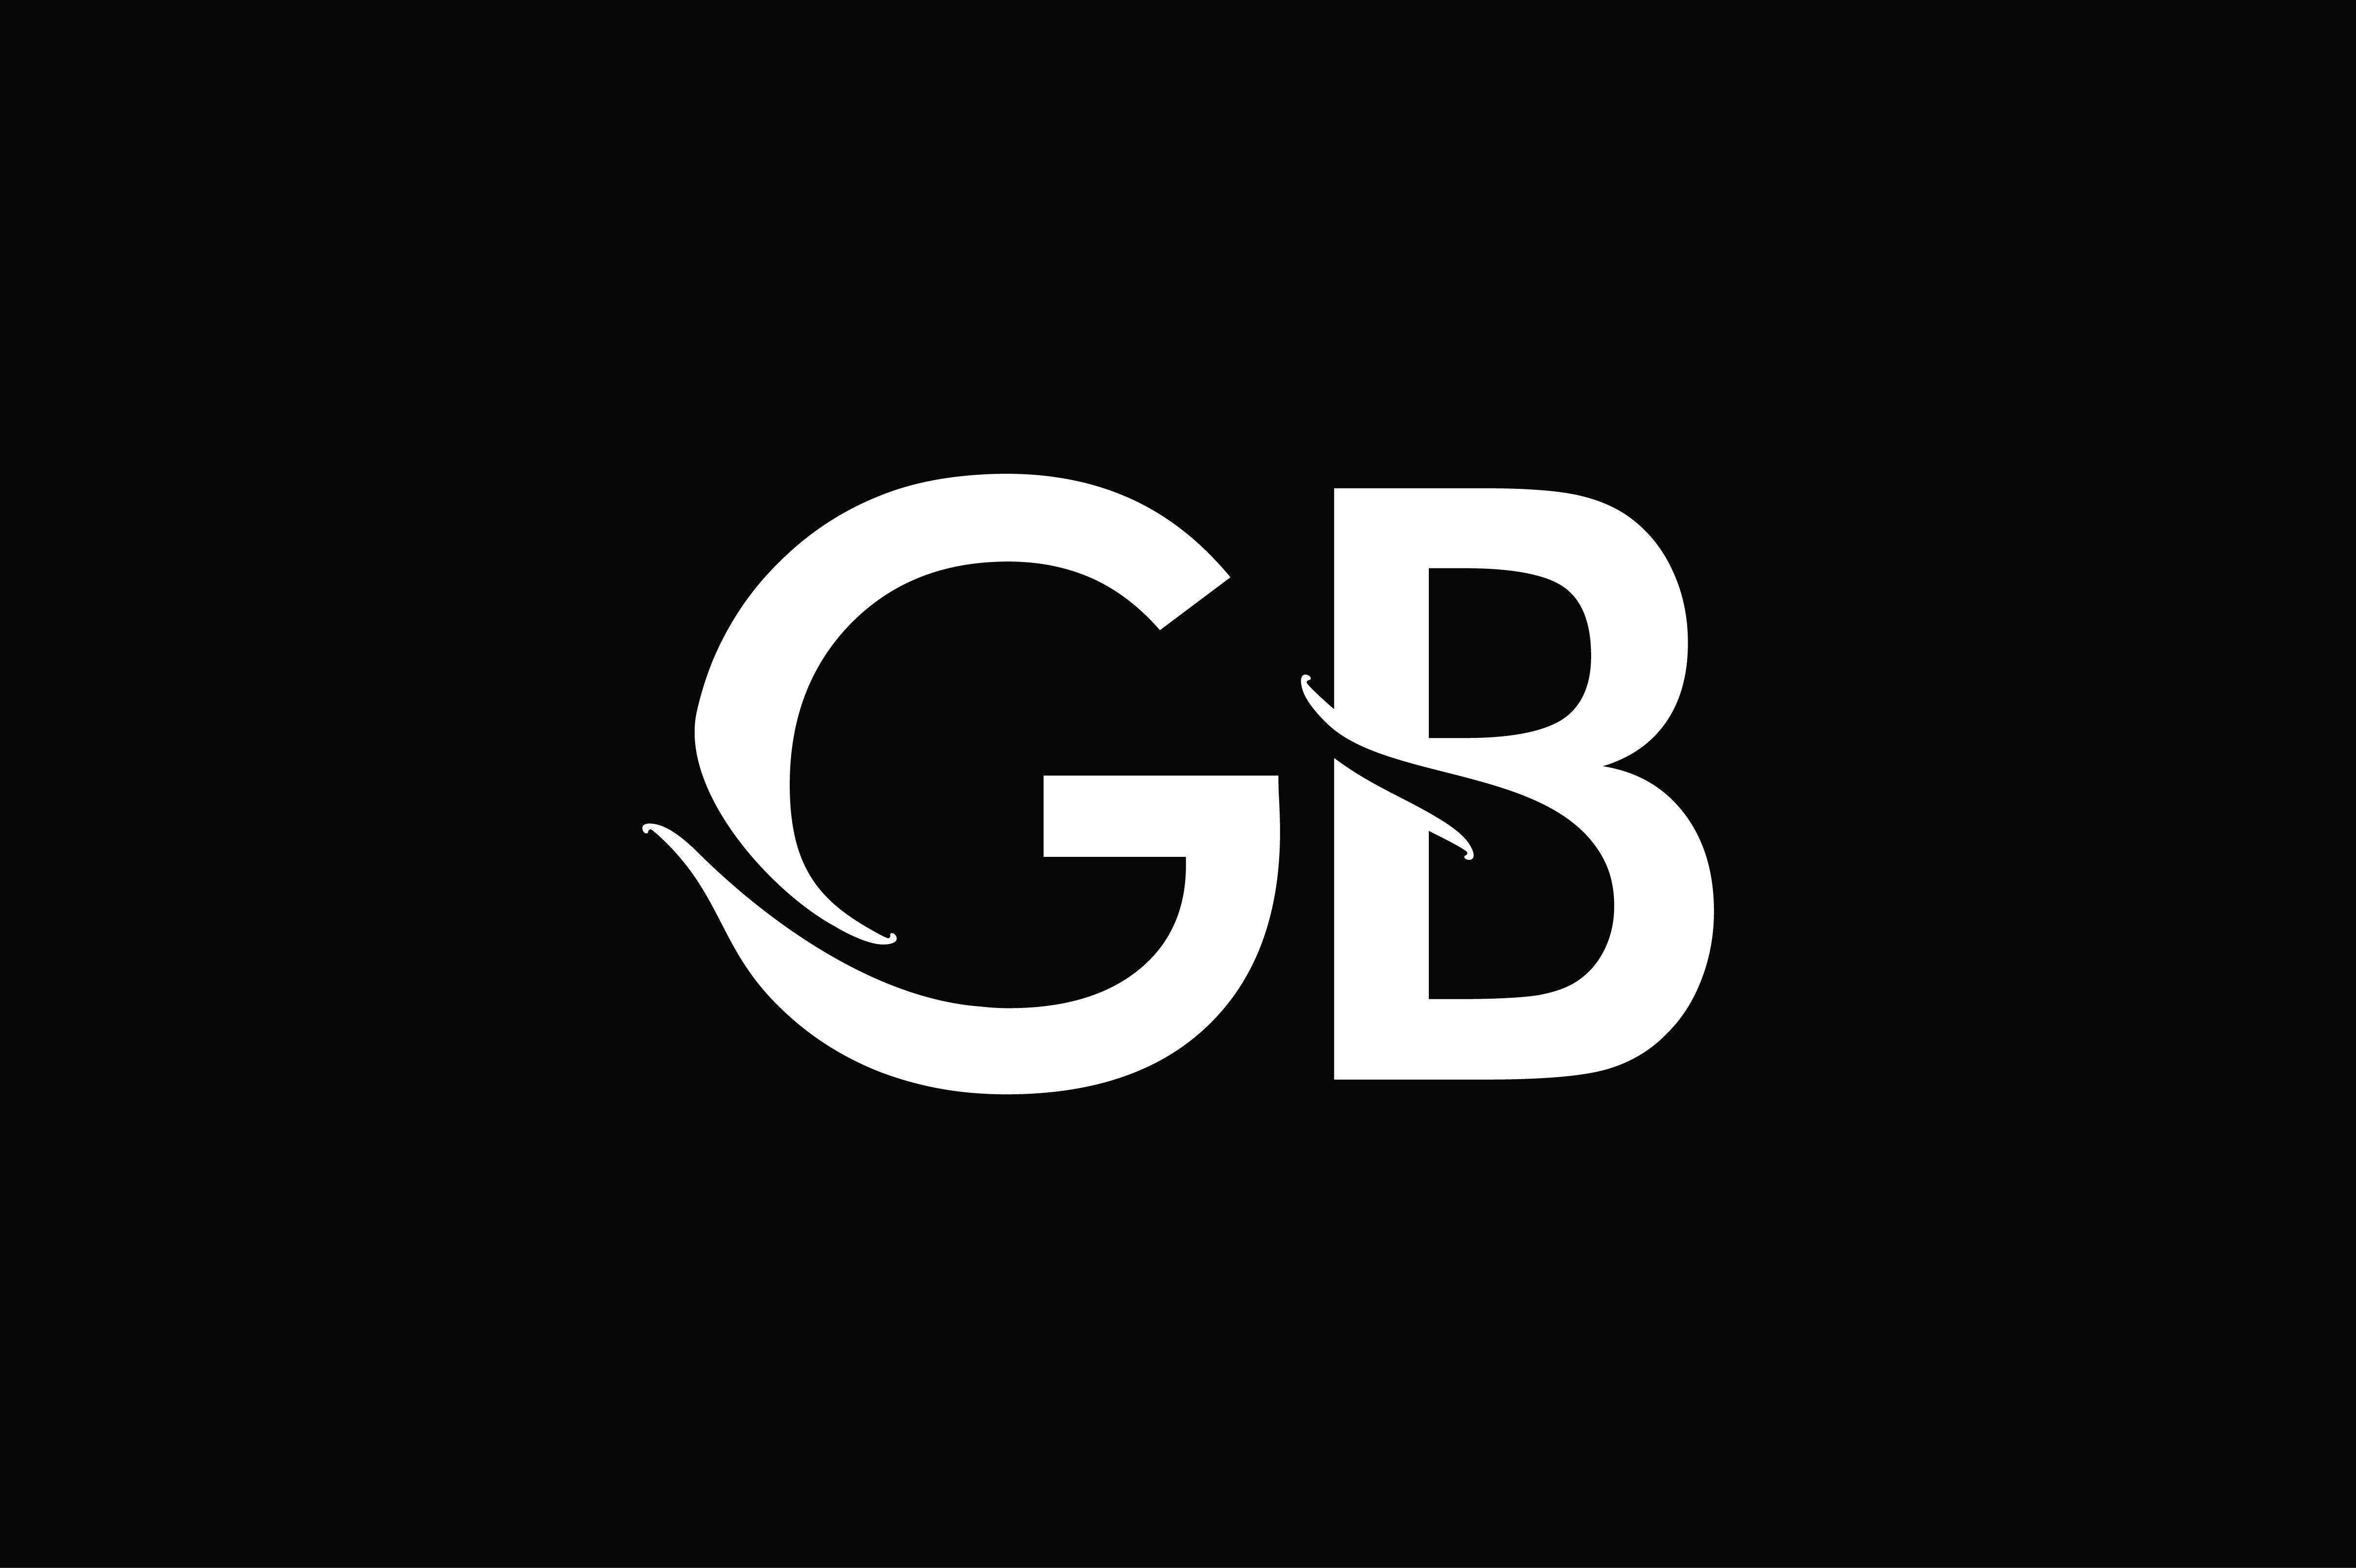  GB Monogram Logo Design By Vectorseller TheHungryJPEG